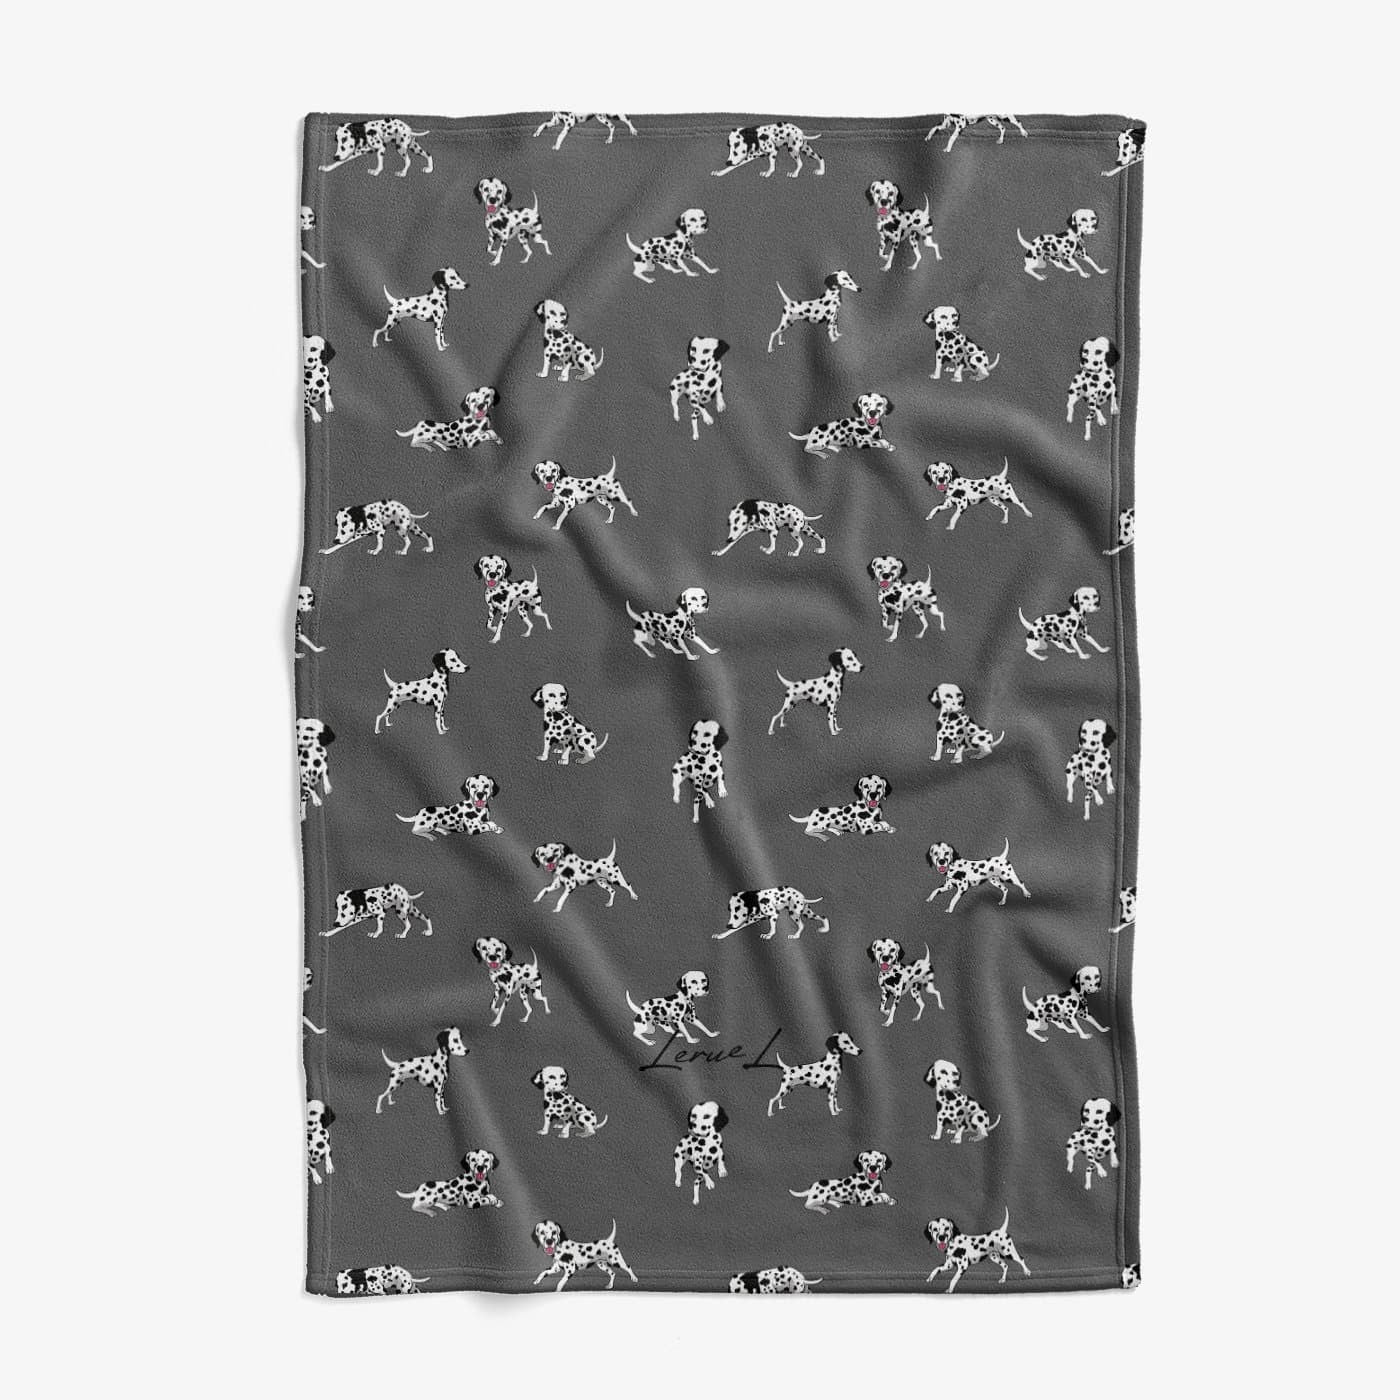 Dalmatian  - Comfy Fleece Blanket